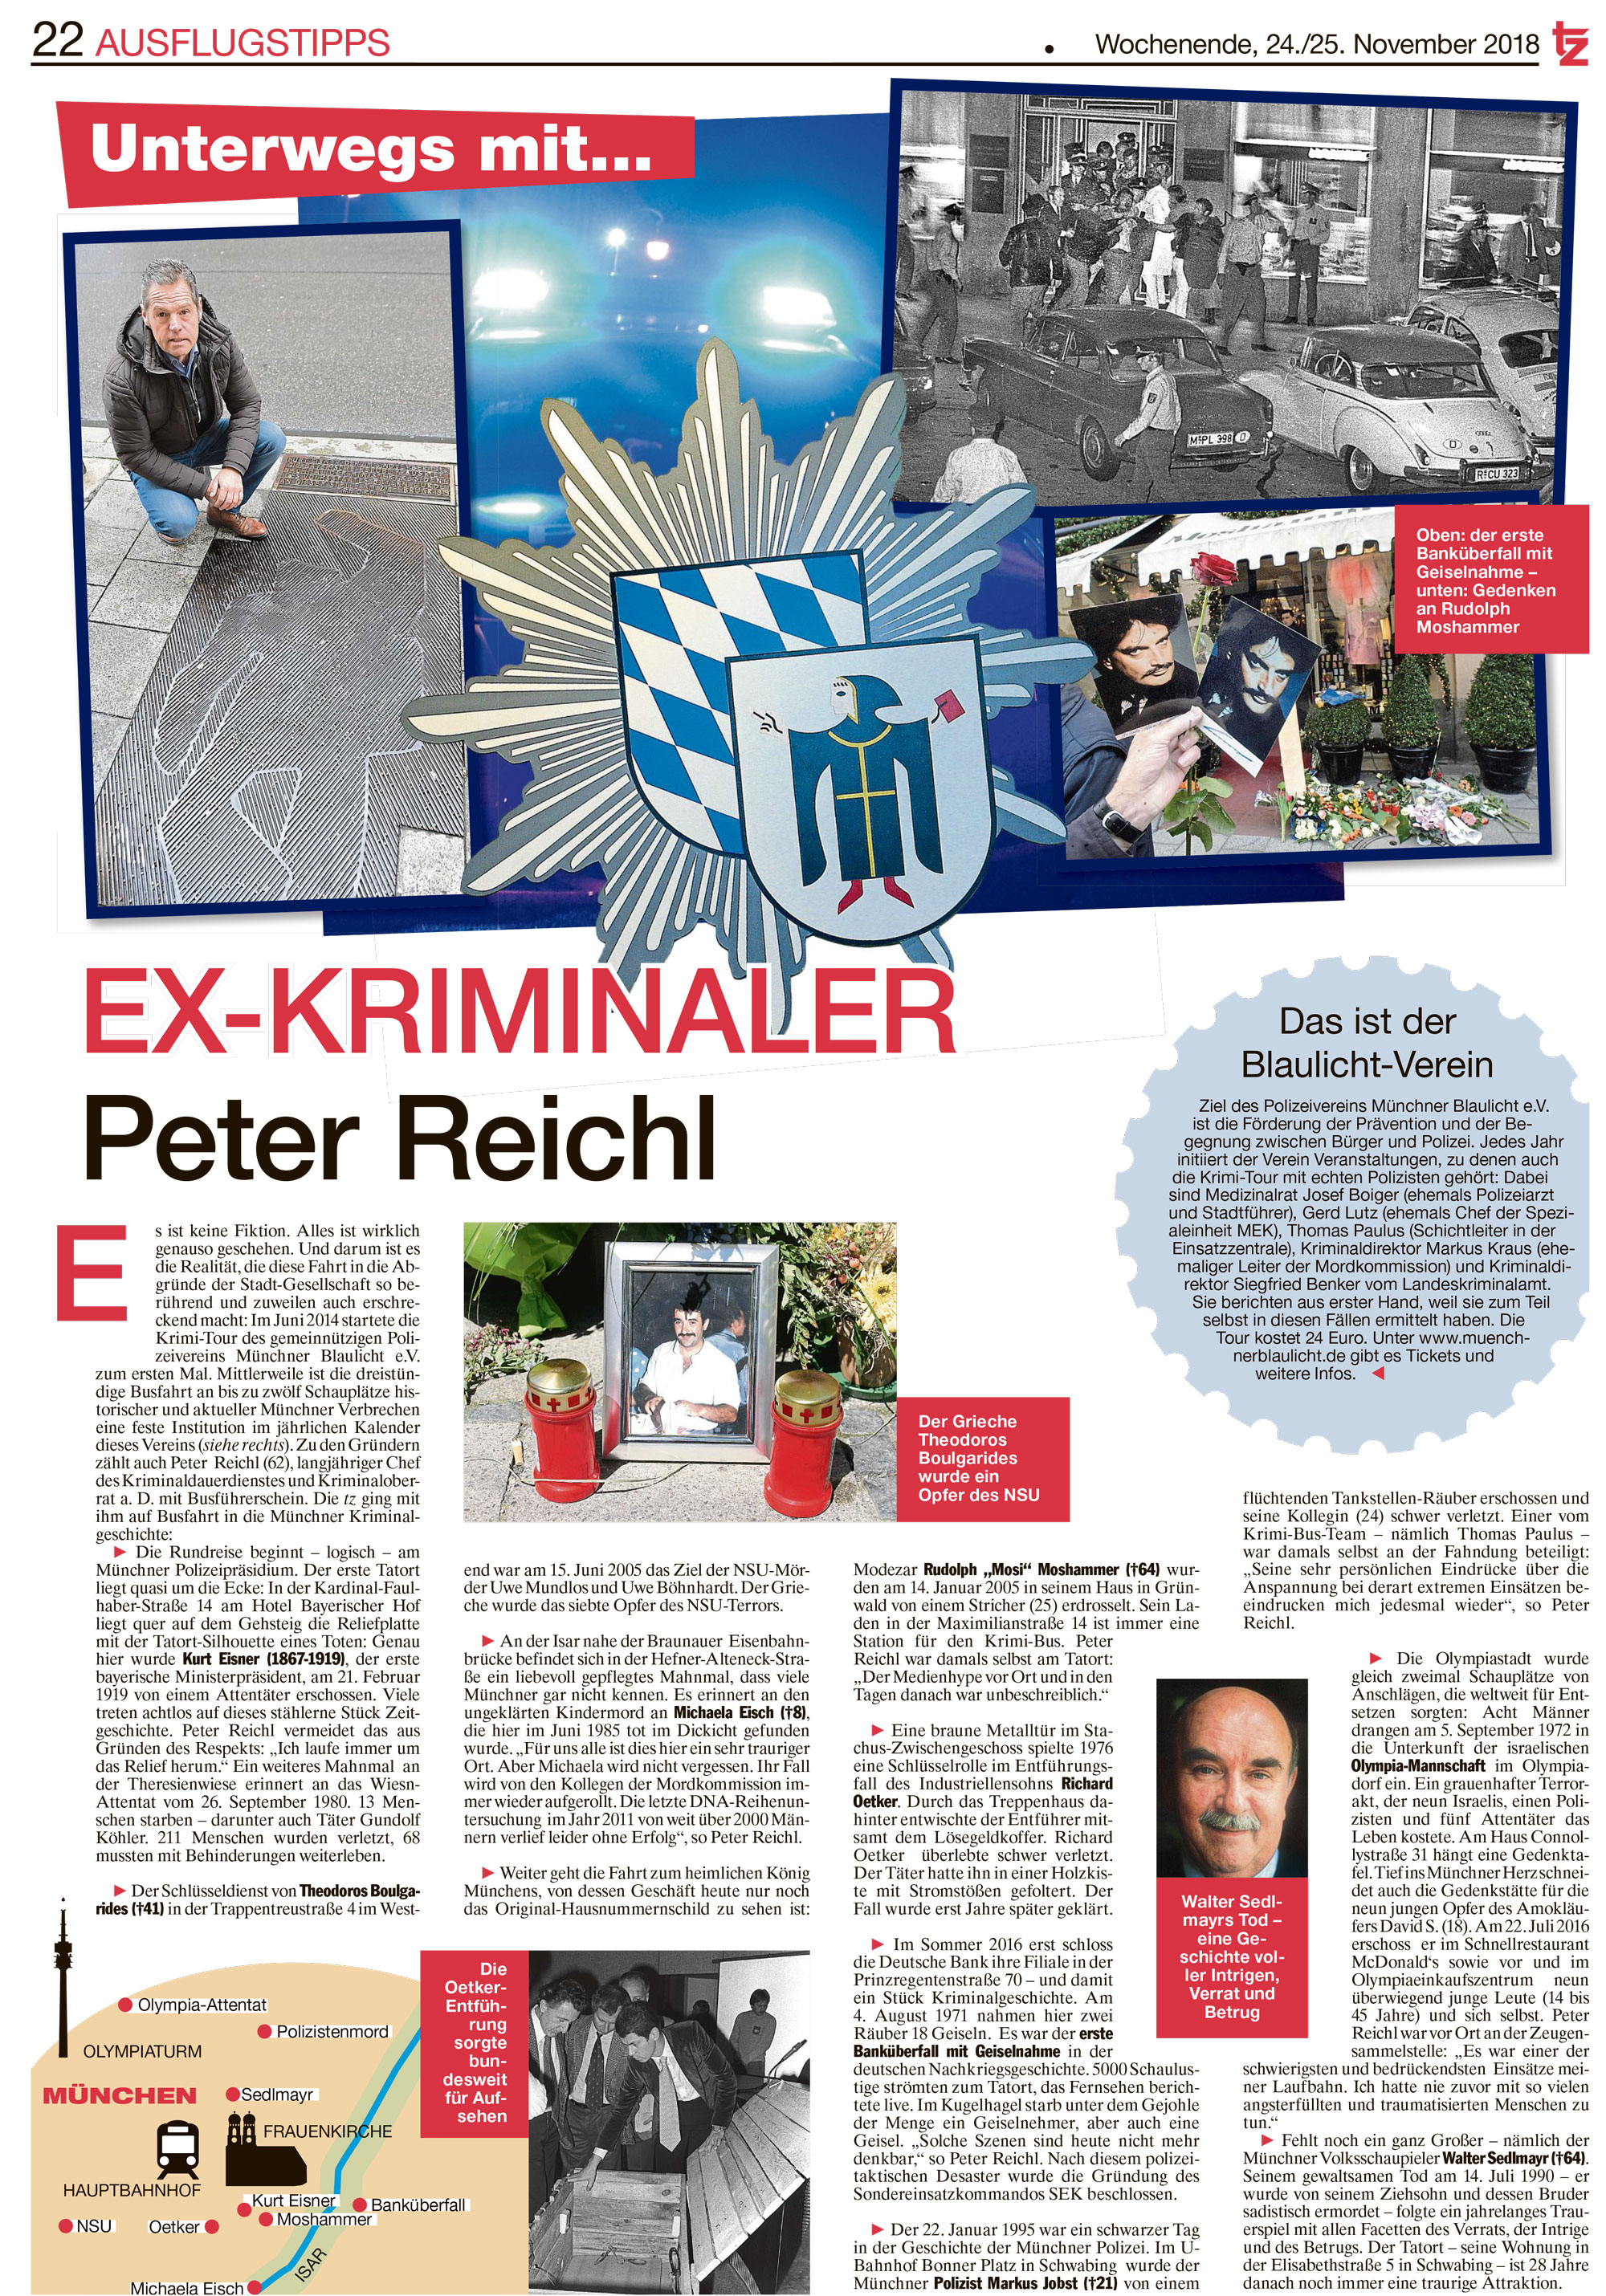 Ex-Kriminaler Peter Reichl